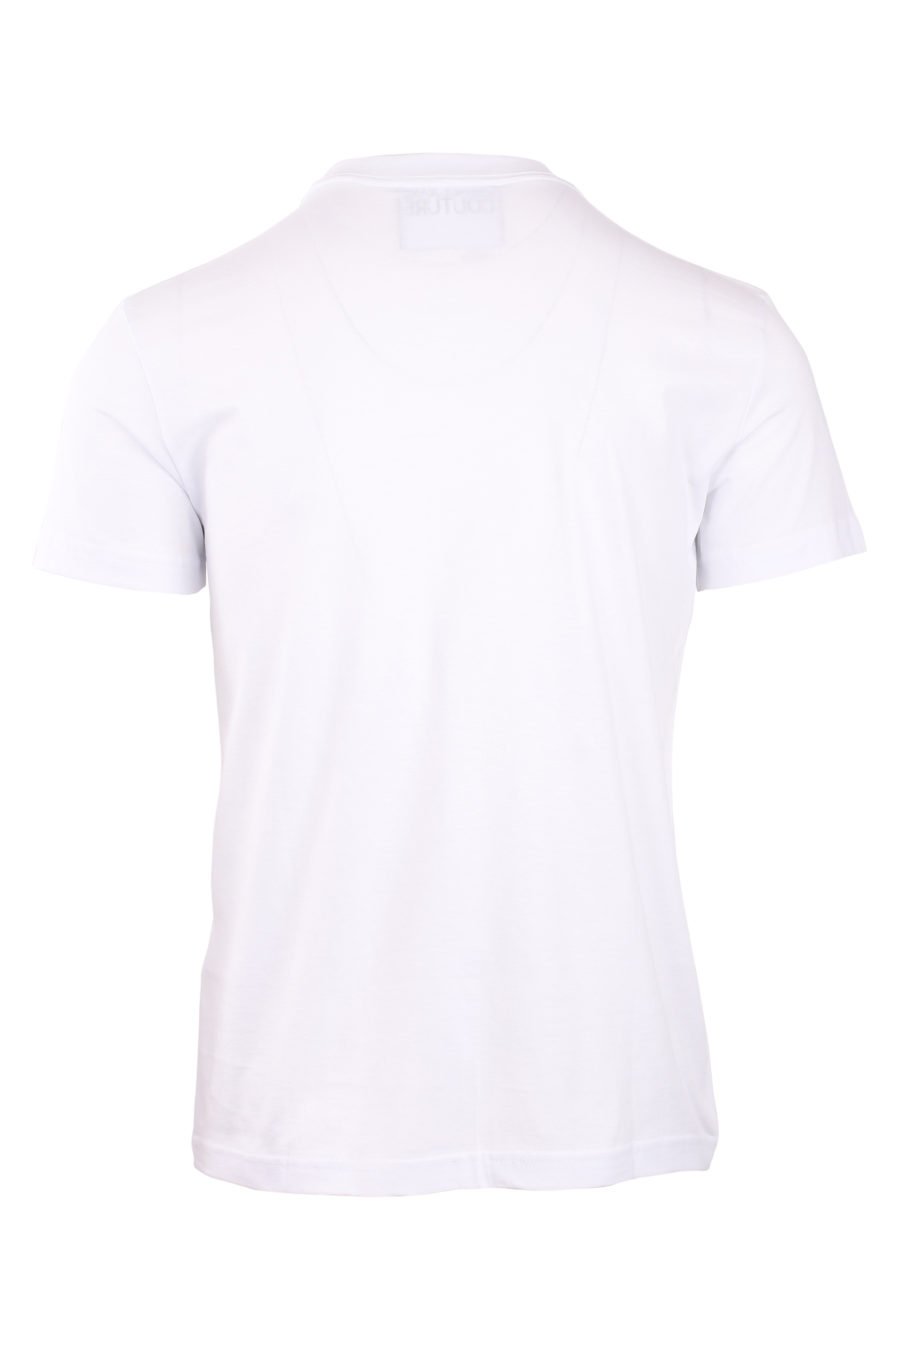 T-shirt blanc avec maxilogo gris - IMG 0756